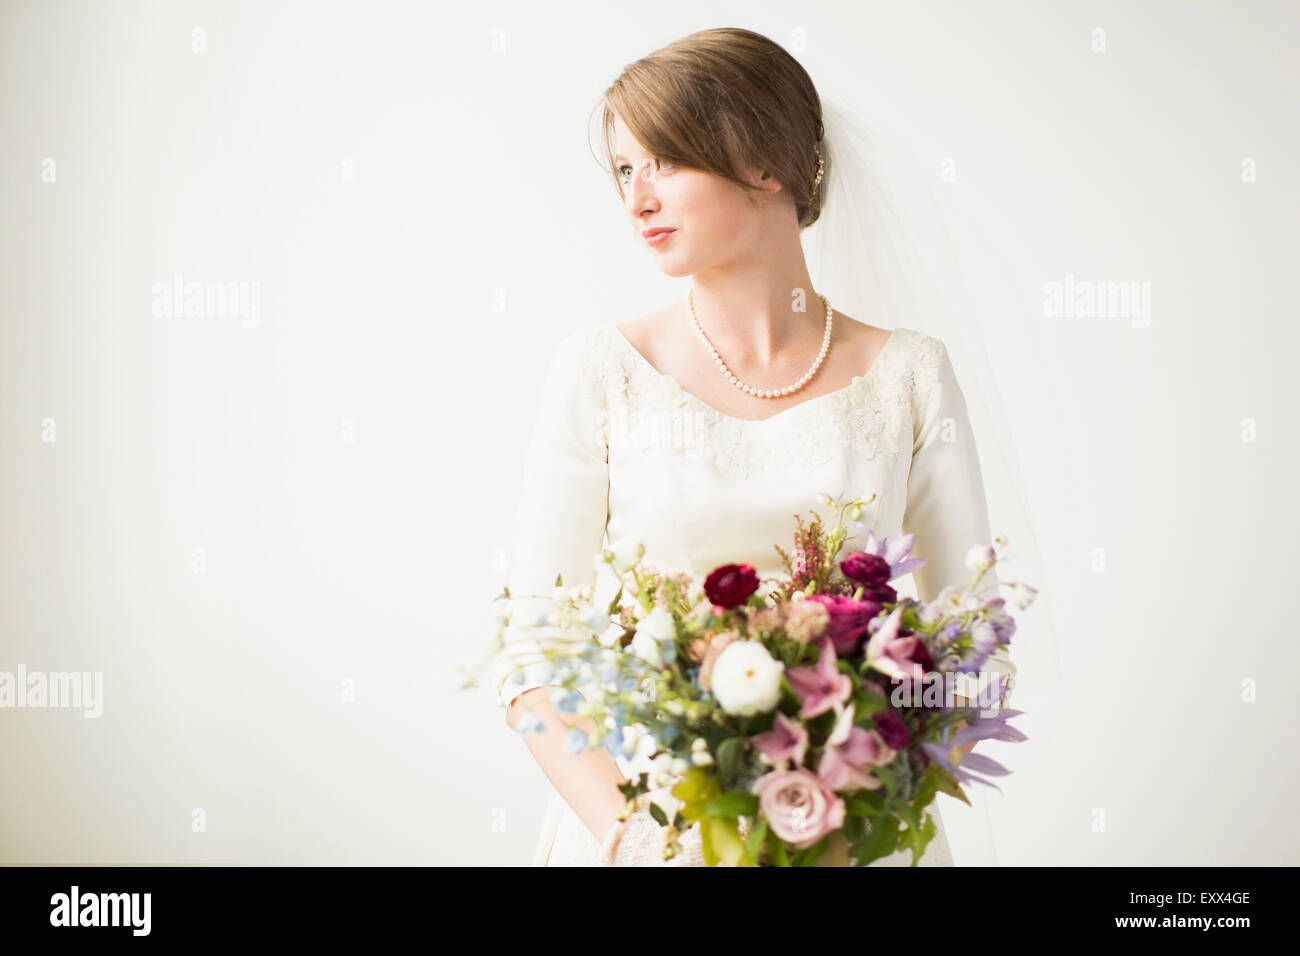 Portrait of bride with wedding bouquet Stock Photo